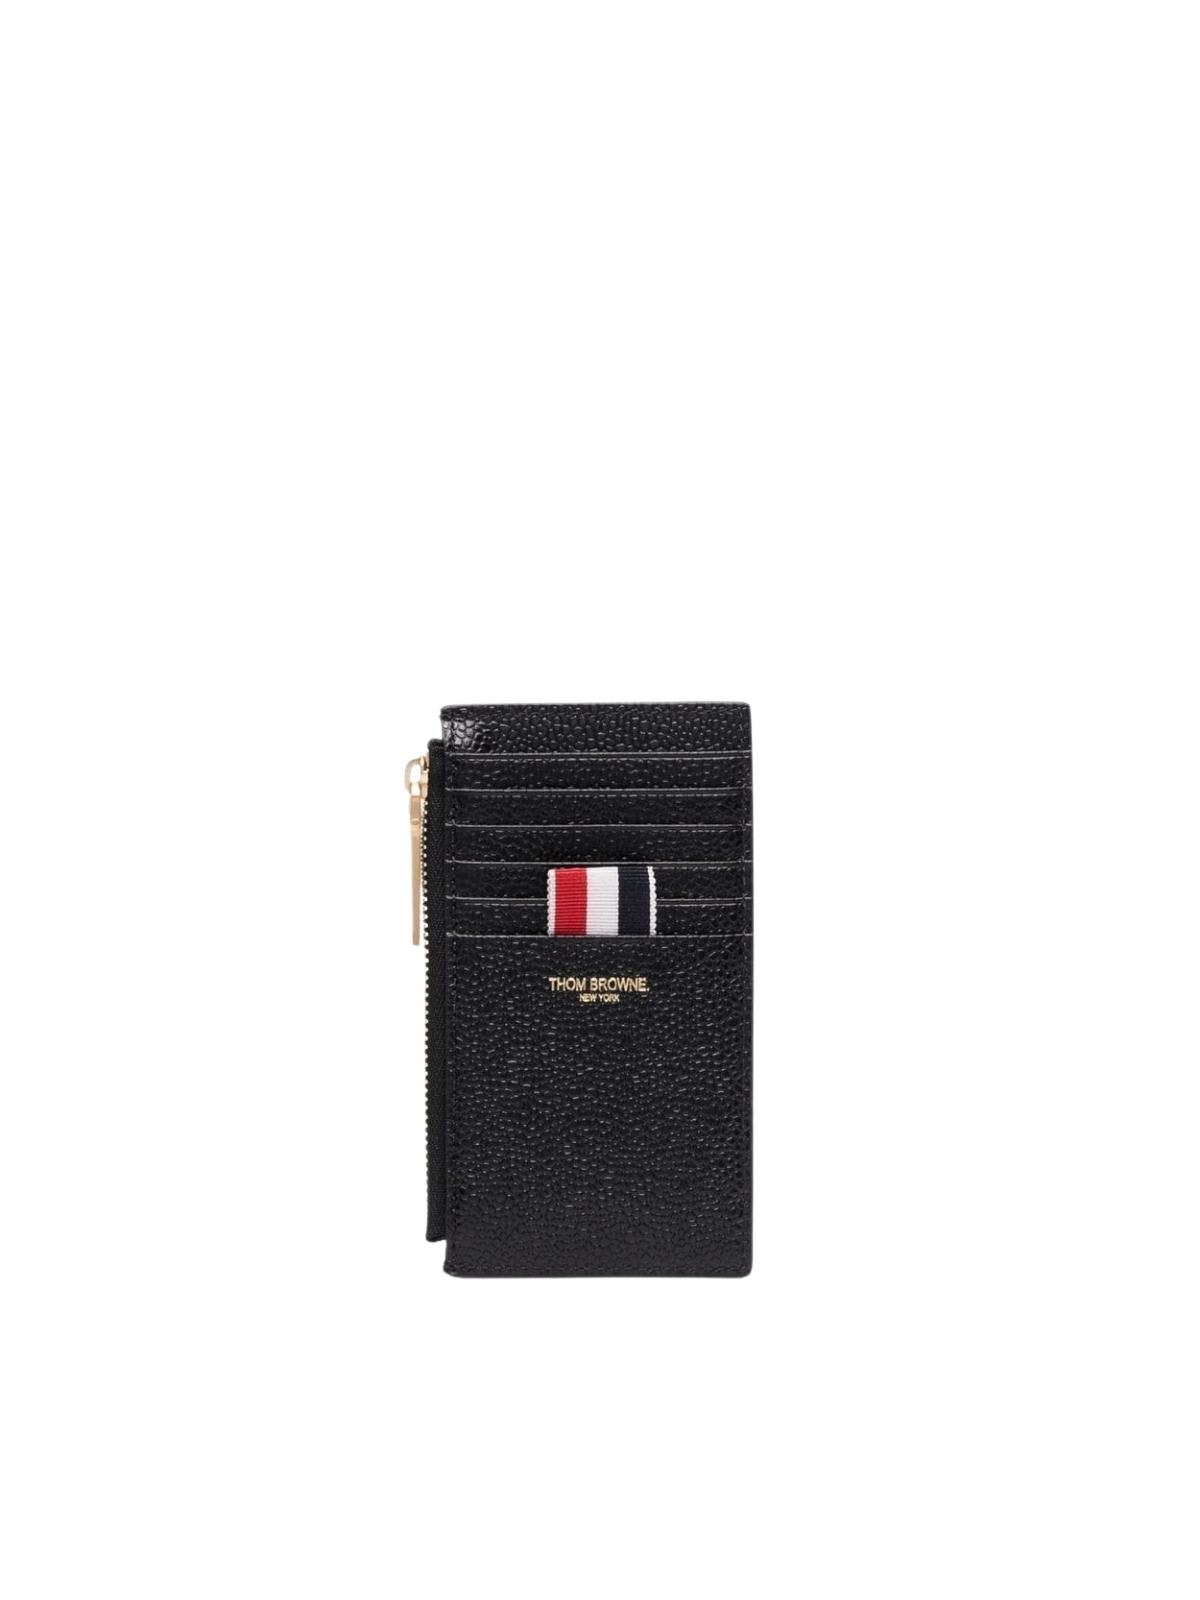 Thom Browne Zippered Card Wallet W/ Debossed 4bar In Pebble Grain Leather - L13, H7